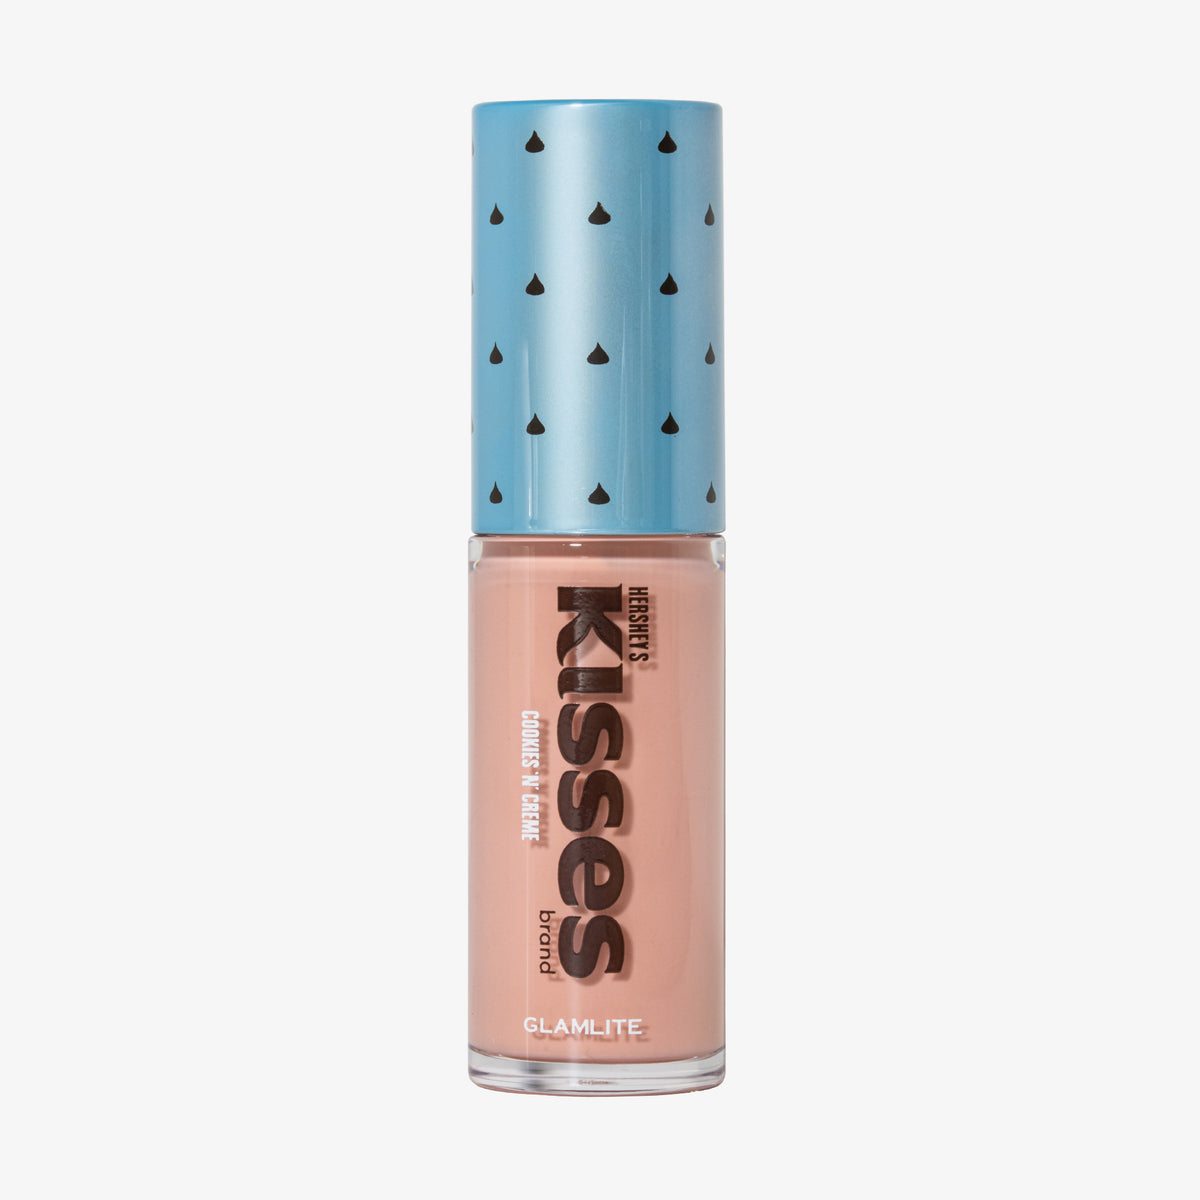 Glamlite Cosmetics | Hershey's Kisses x Glamlite Lip Gloss Set